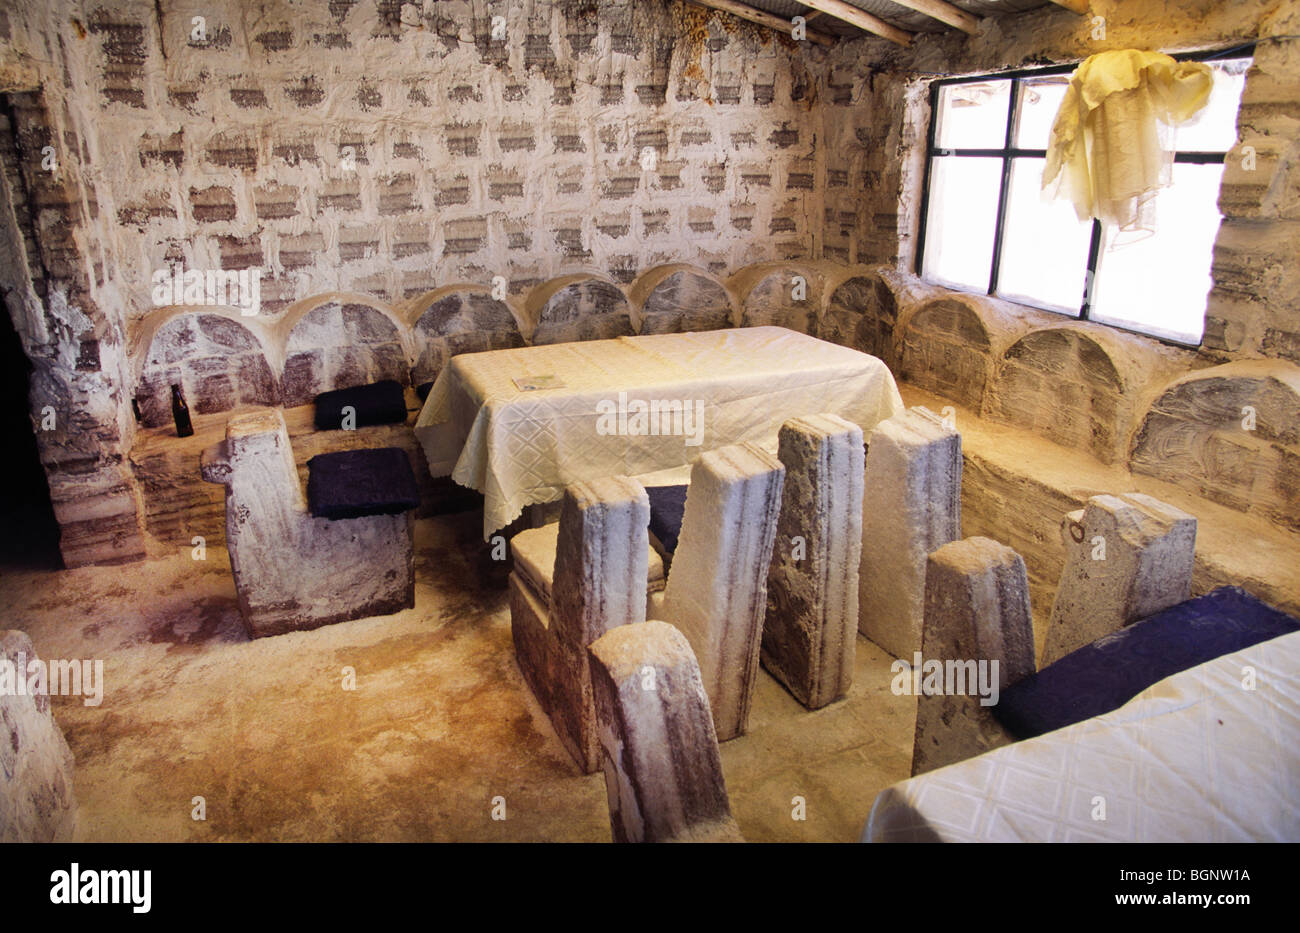 Interior of Salt Hotel where furniture's are made of Salt blocks. Salar de Uyuni, Bolivia. Stock Photo